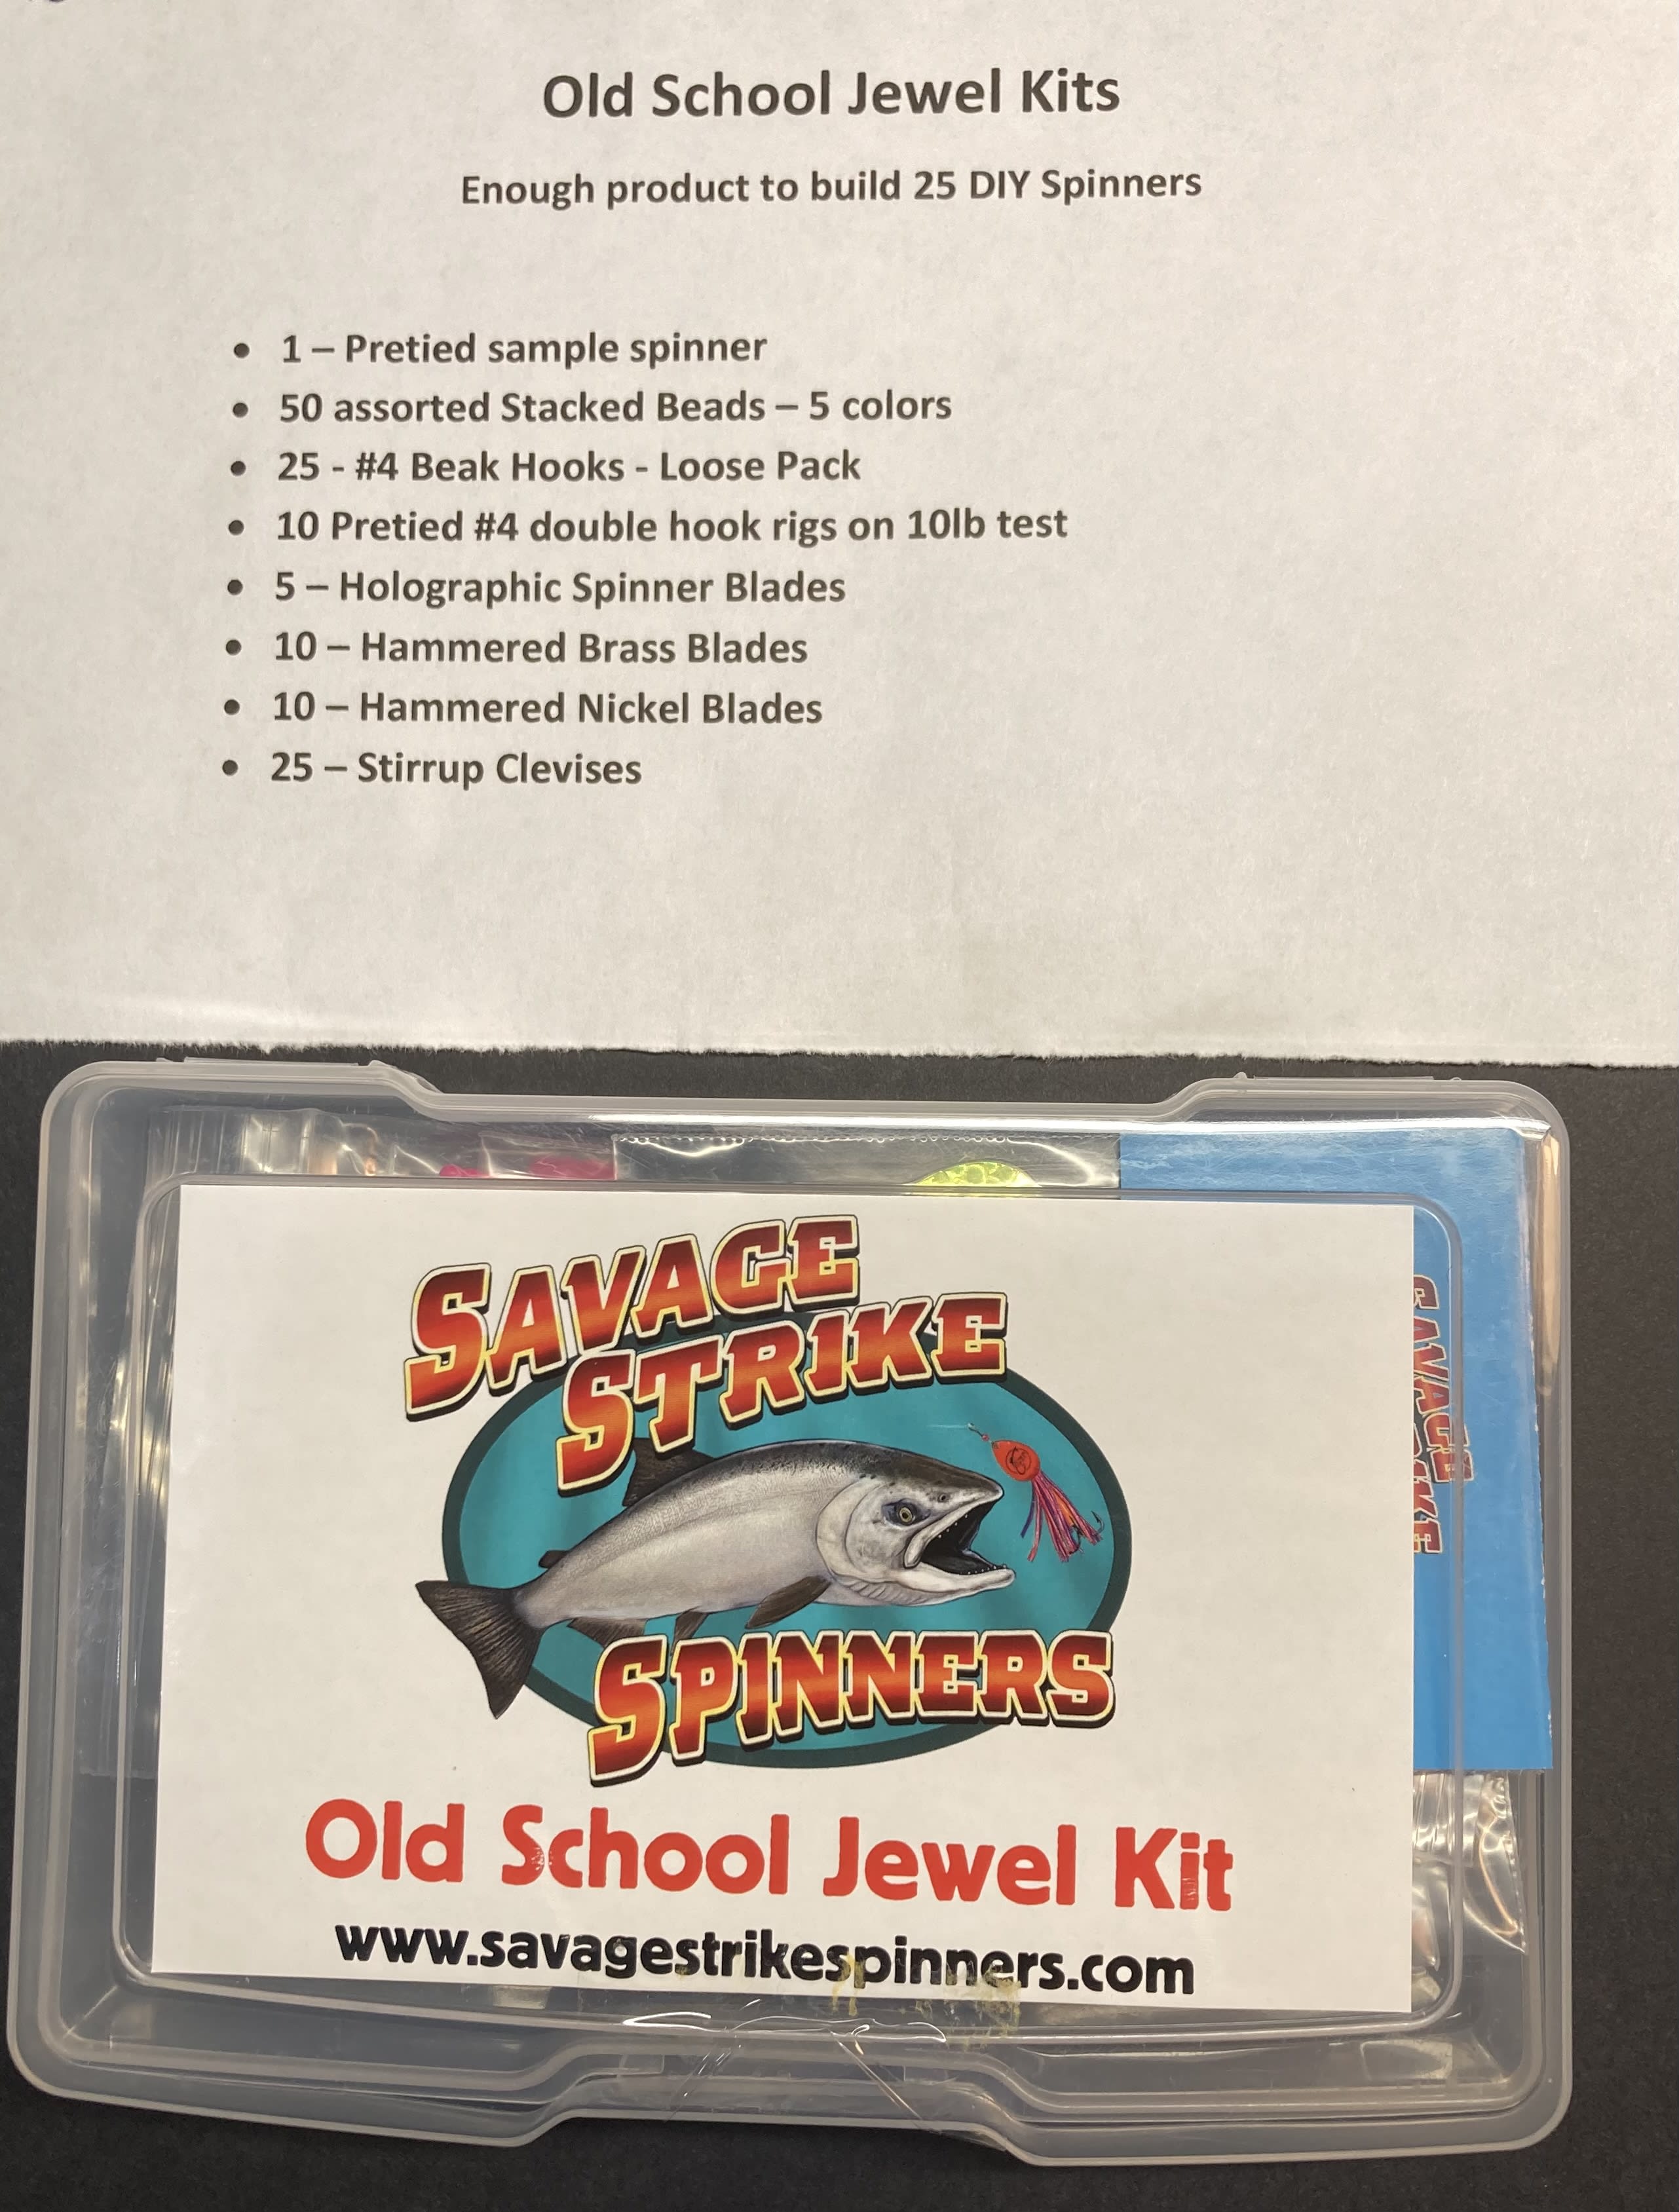 Old School Jewel Kit - DIY KOKANEE SPINNER KITS - Savage Strike